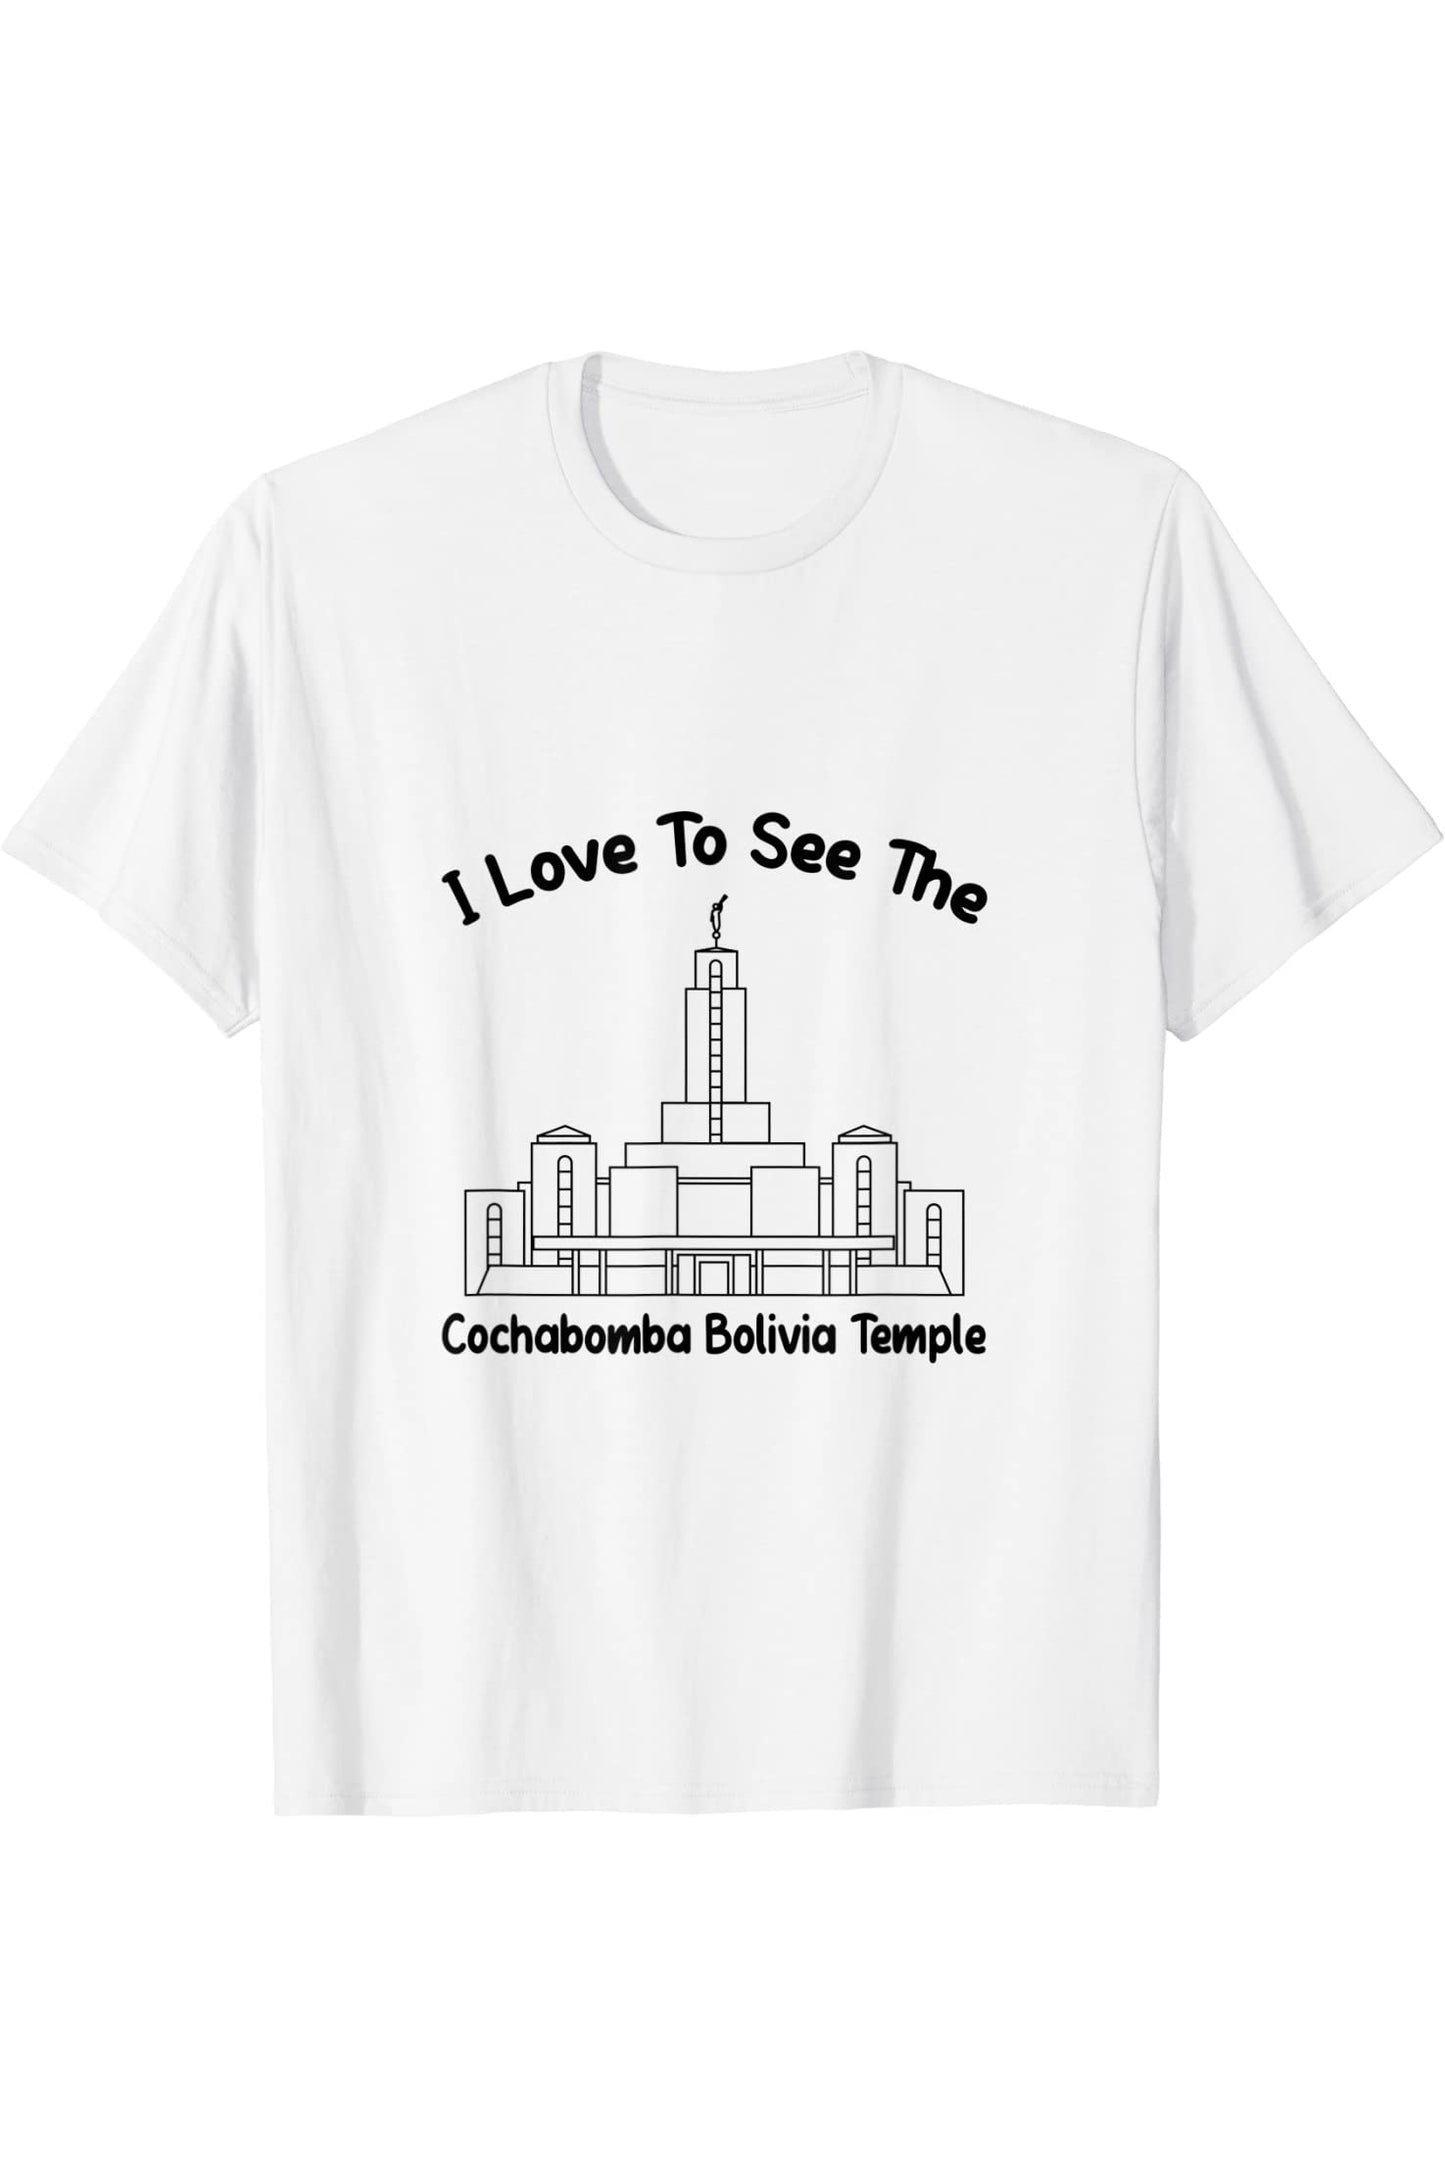 Cochabamba Bolivia Temple T-Shirt - Primary Style (English) US